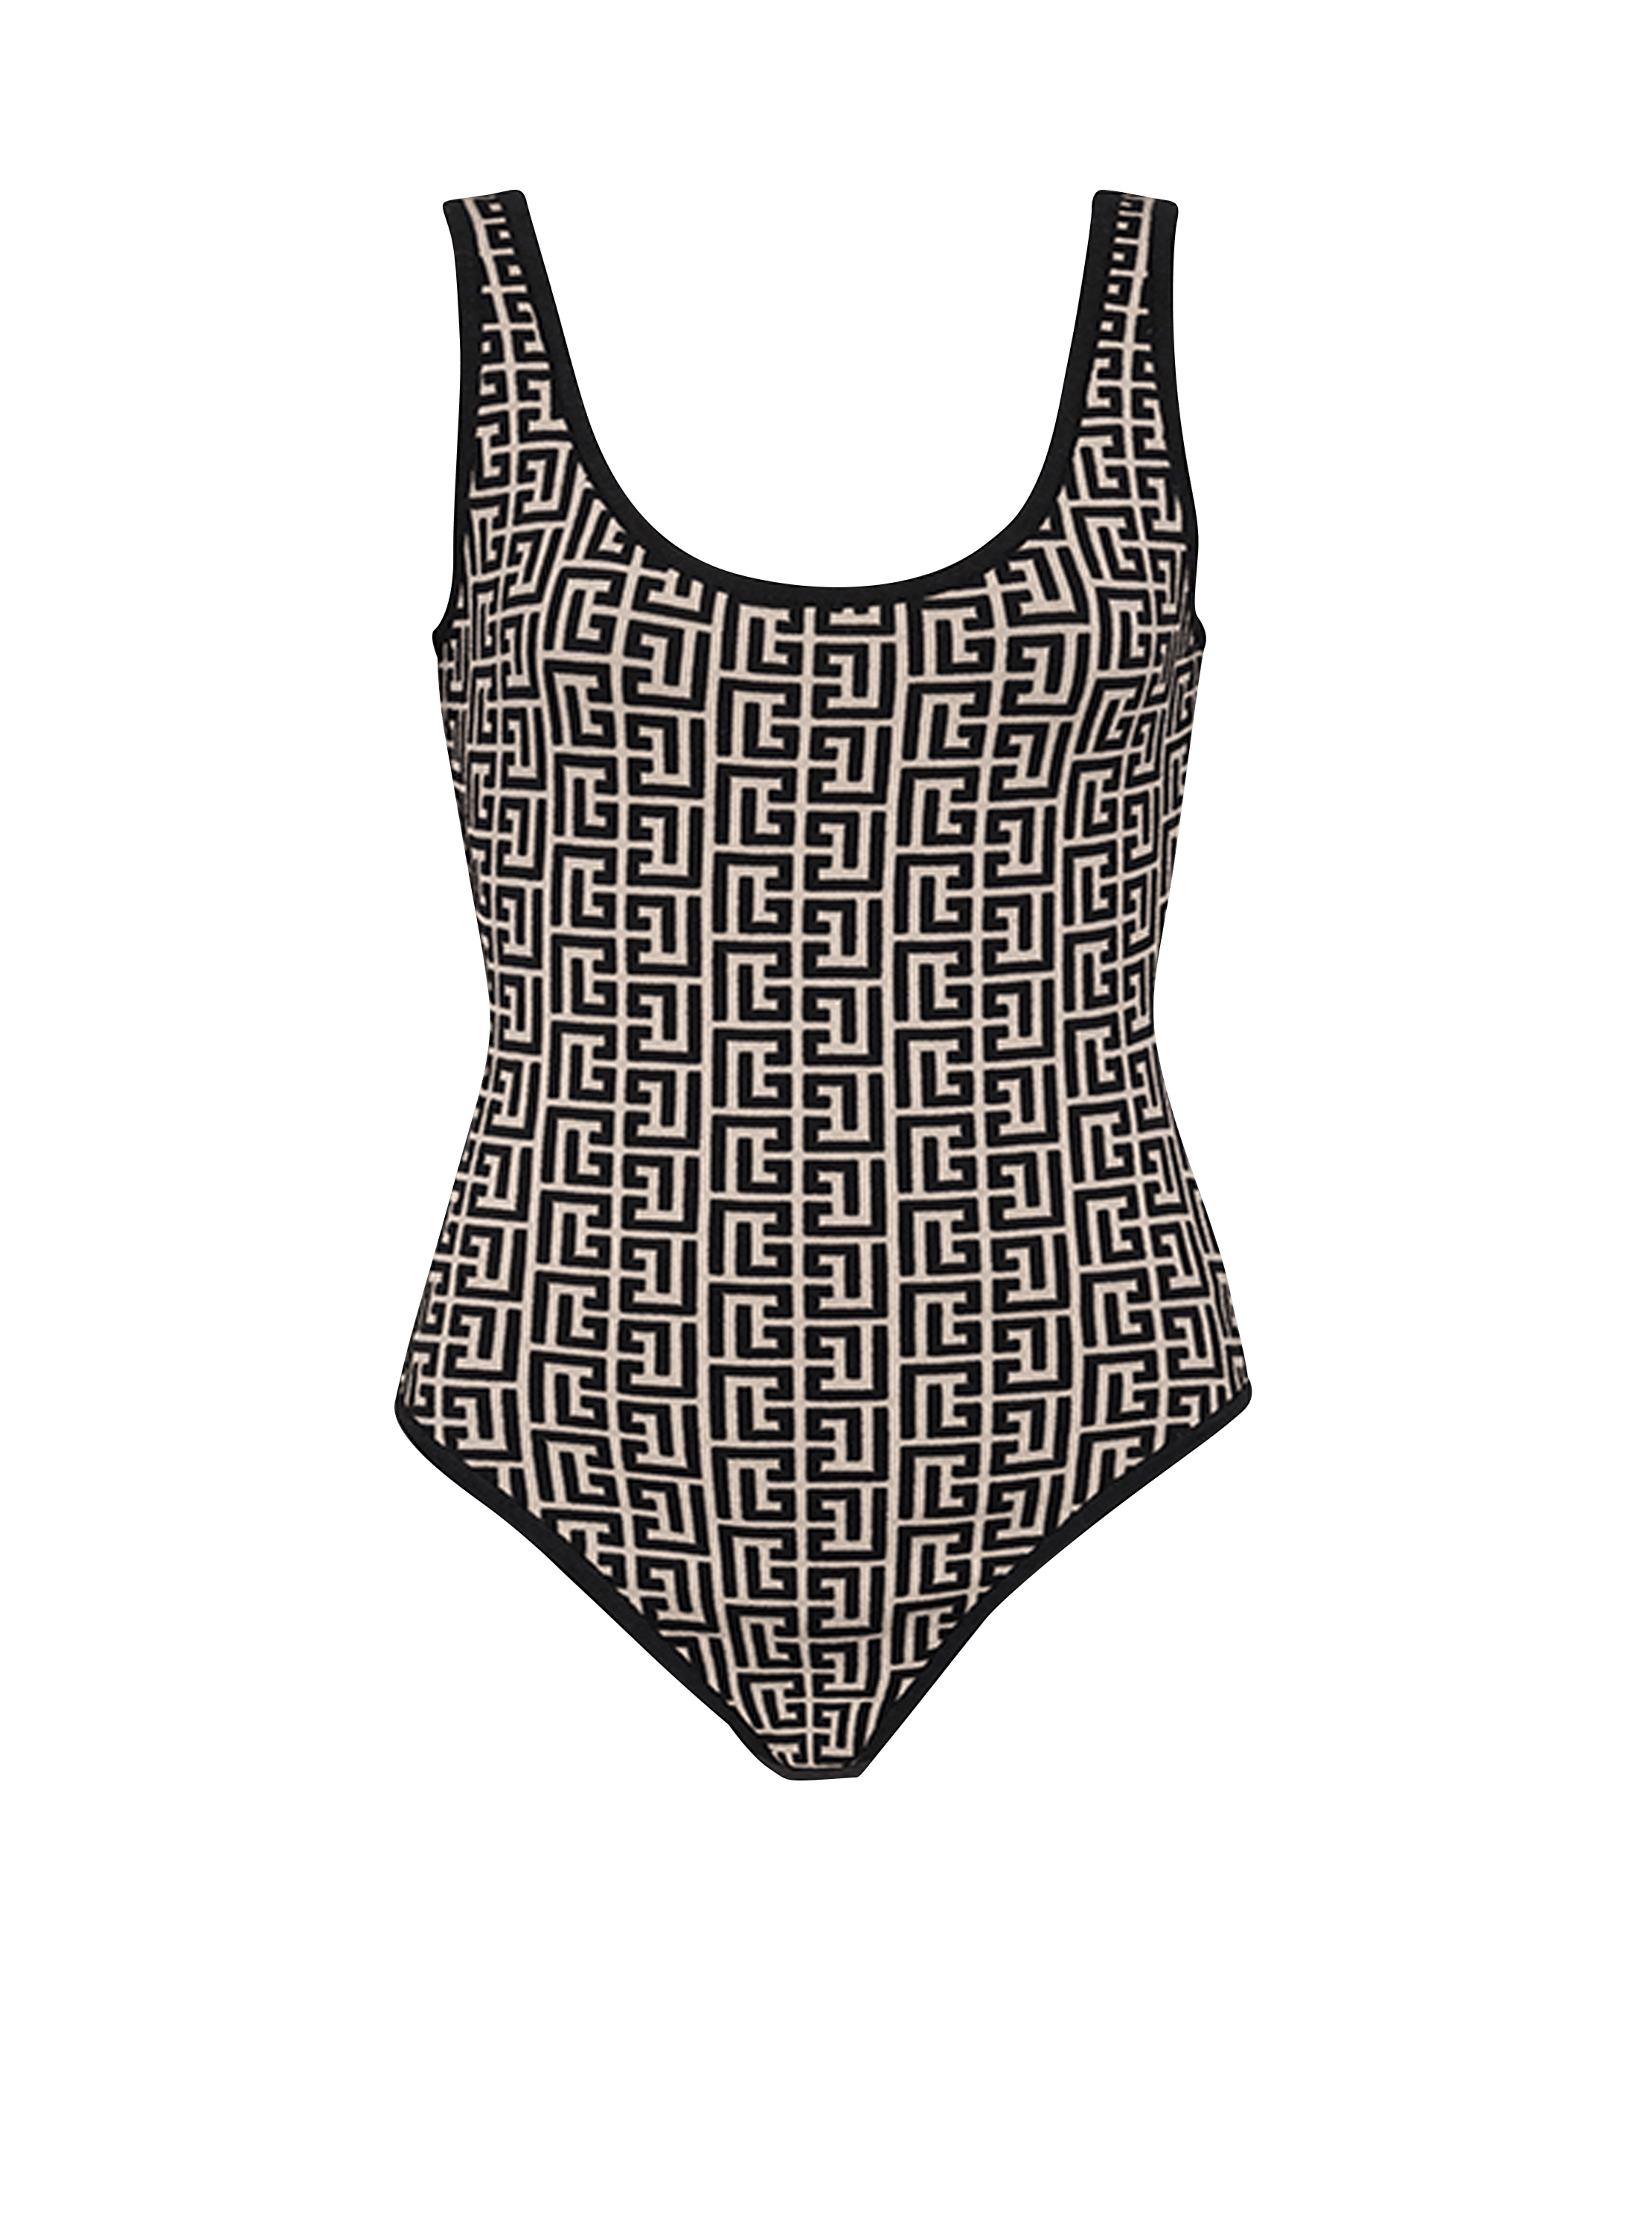 Bicolor jacquard bodysuit with Balmain monogram black - Women